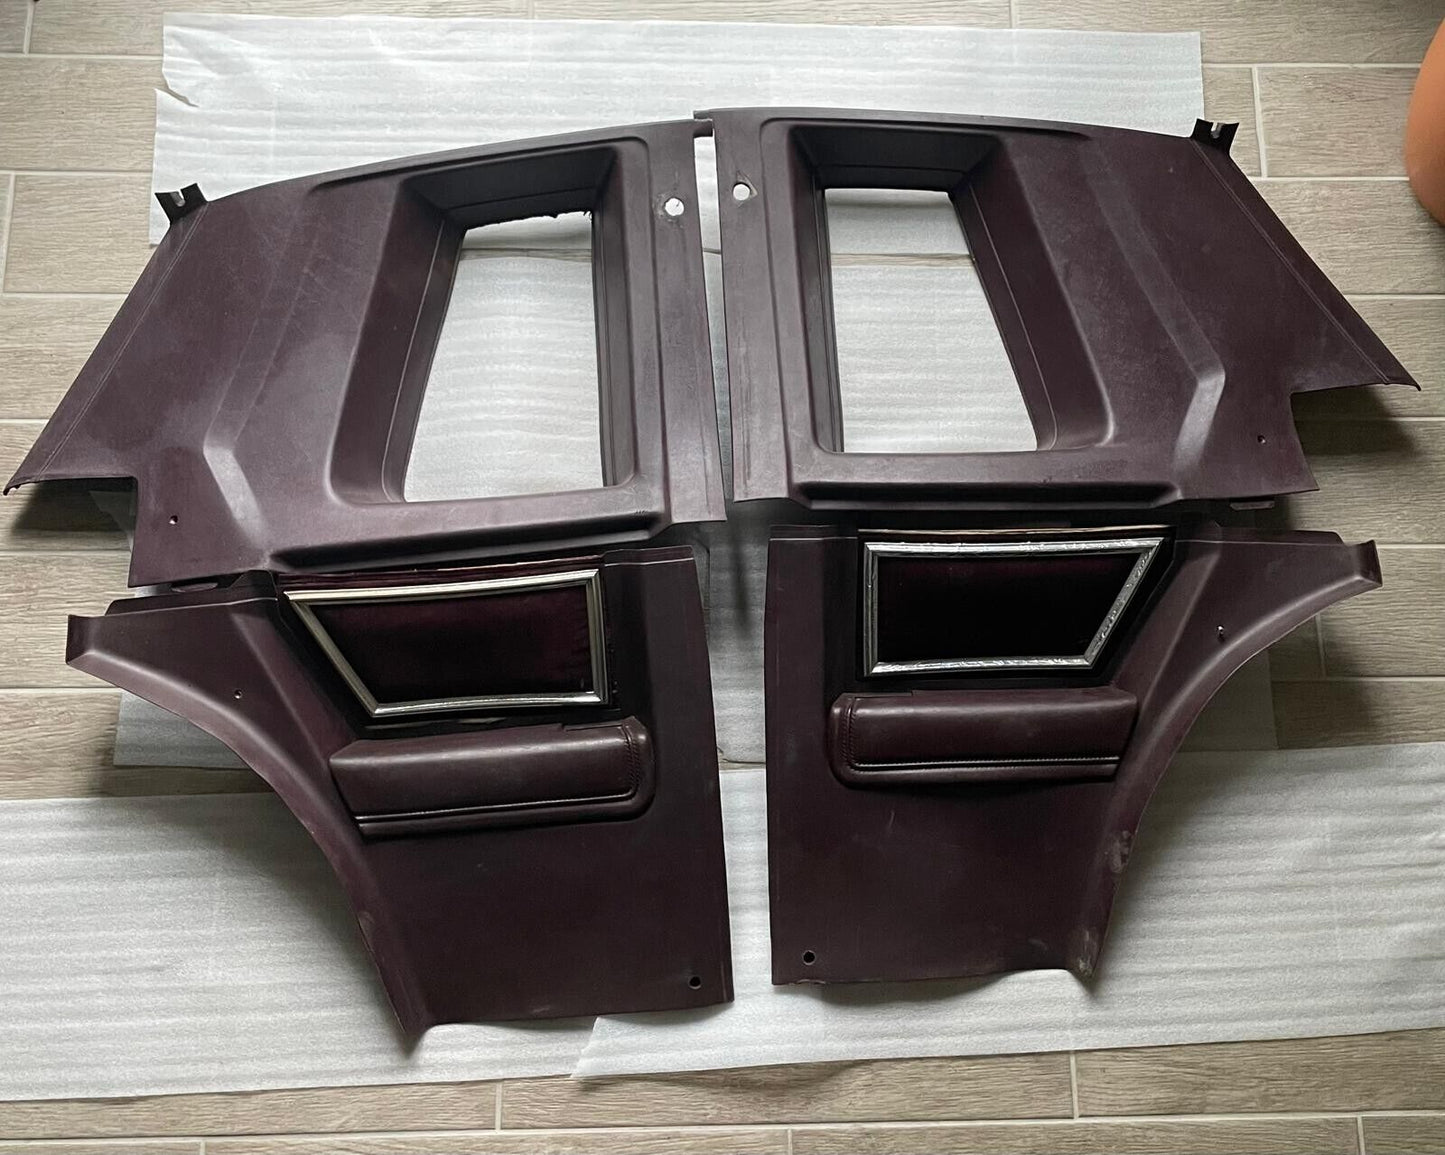 81-88 Cutlass Supreme rear Quarter Panel Interior Trim oxblood